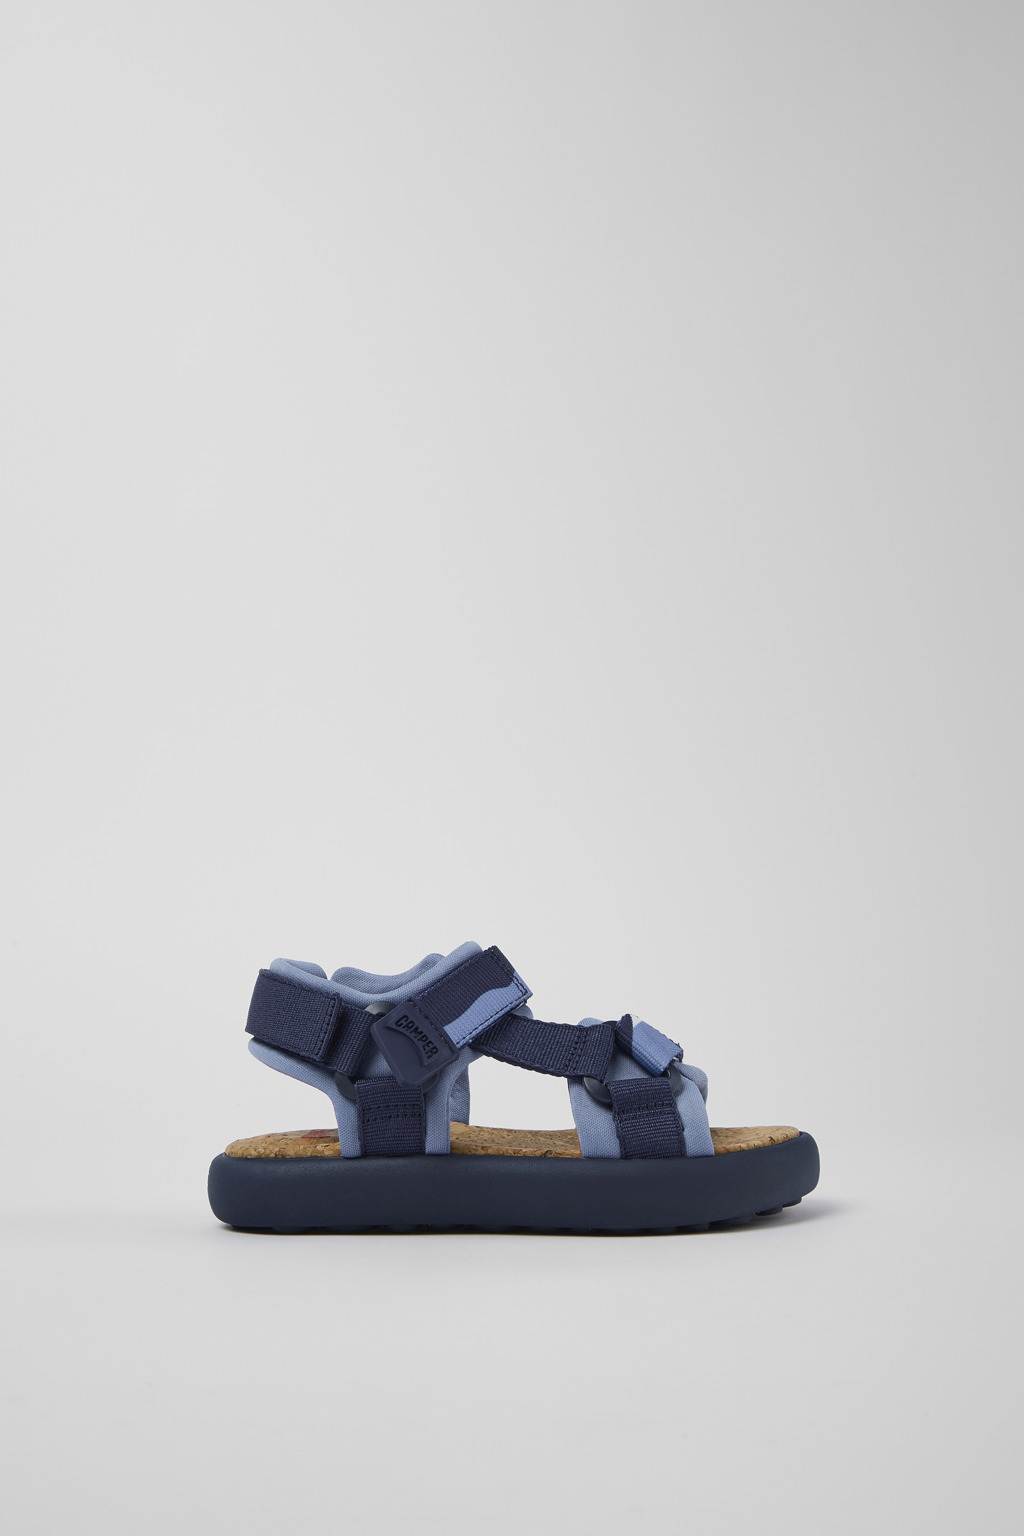 Pelotas Blue Sandals for Kids - Fall/Winter collection - Camper USA